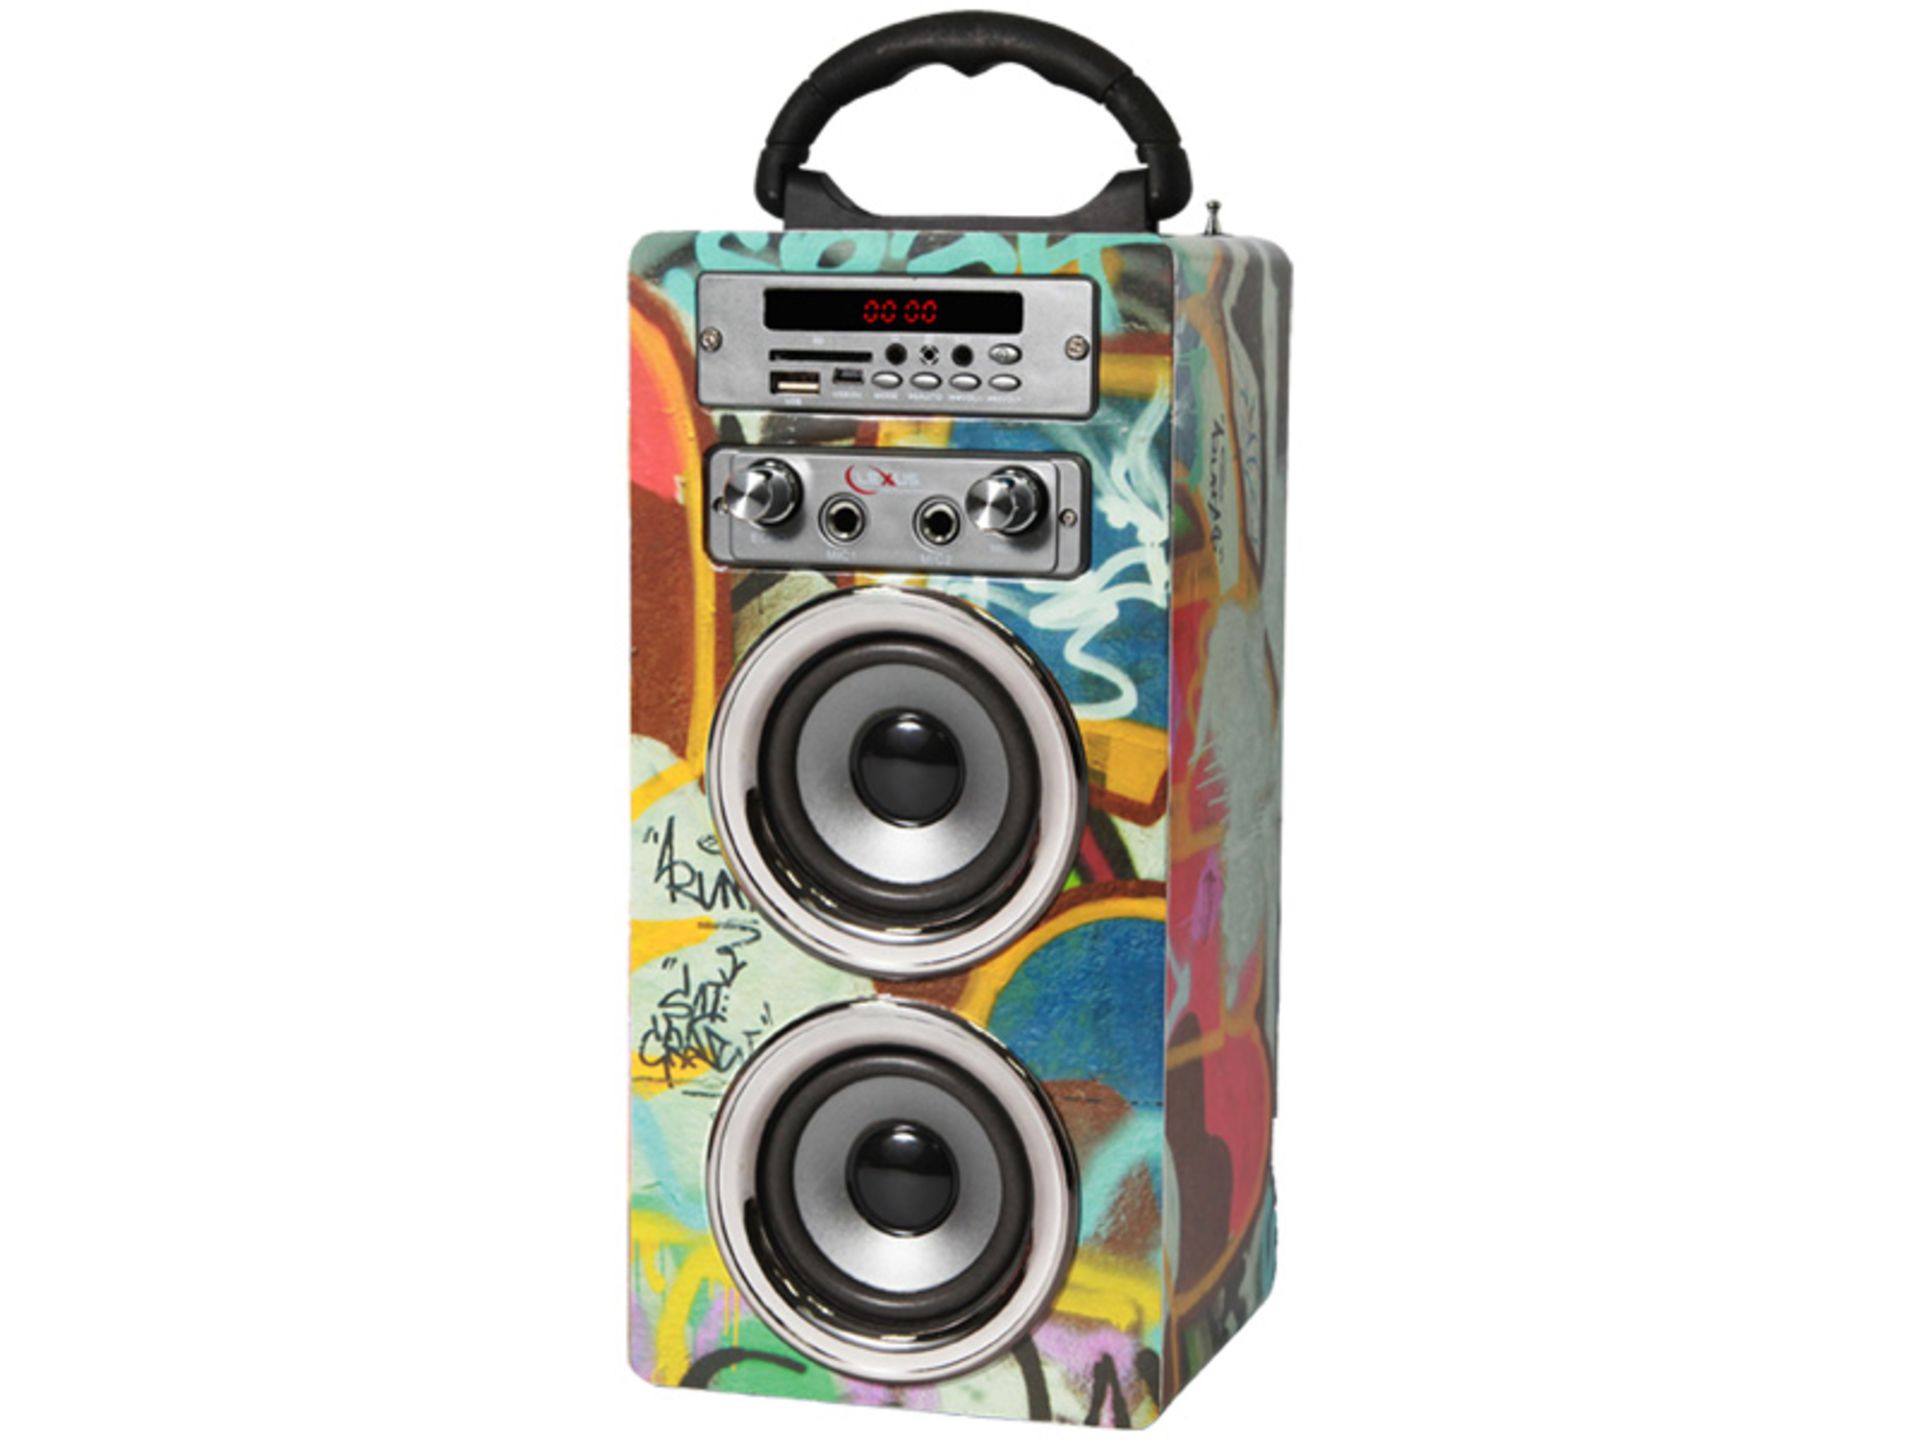 V Brand New Pure Acoustics Graffiti Portable Karaoke Machine ISP 29.98 (Amazon)